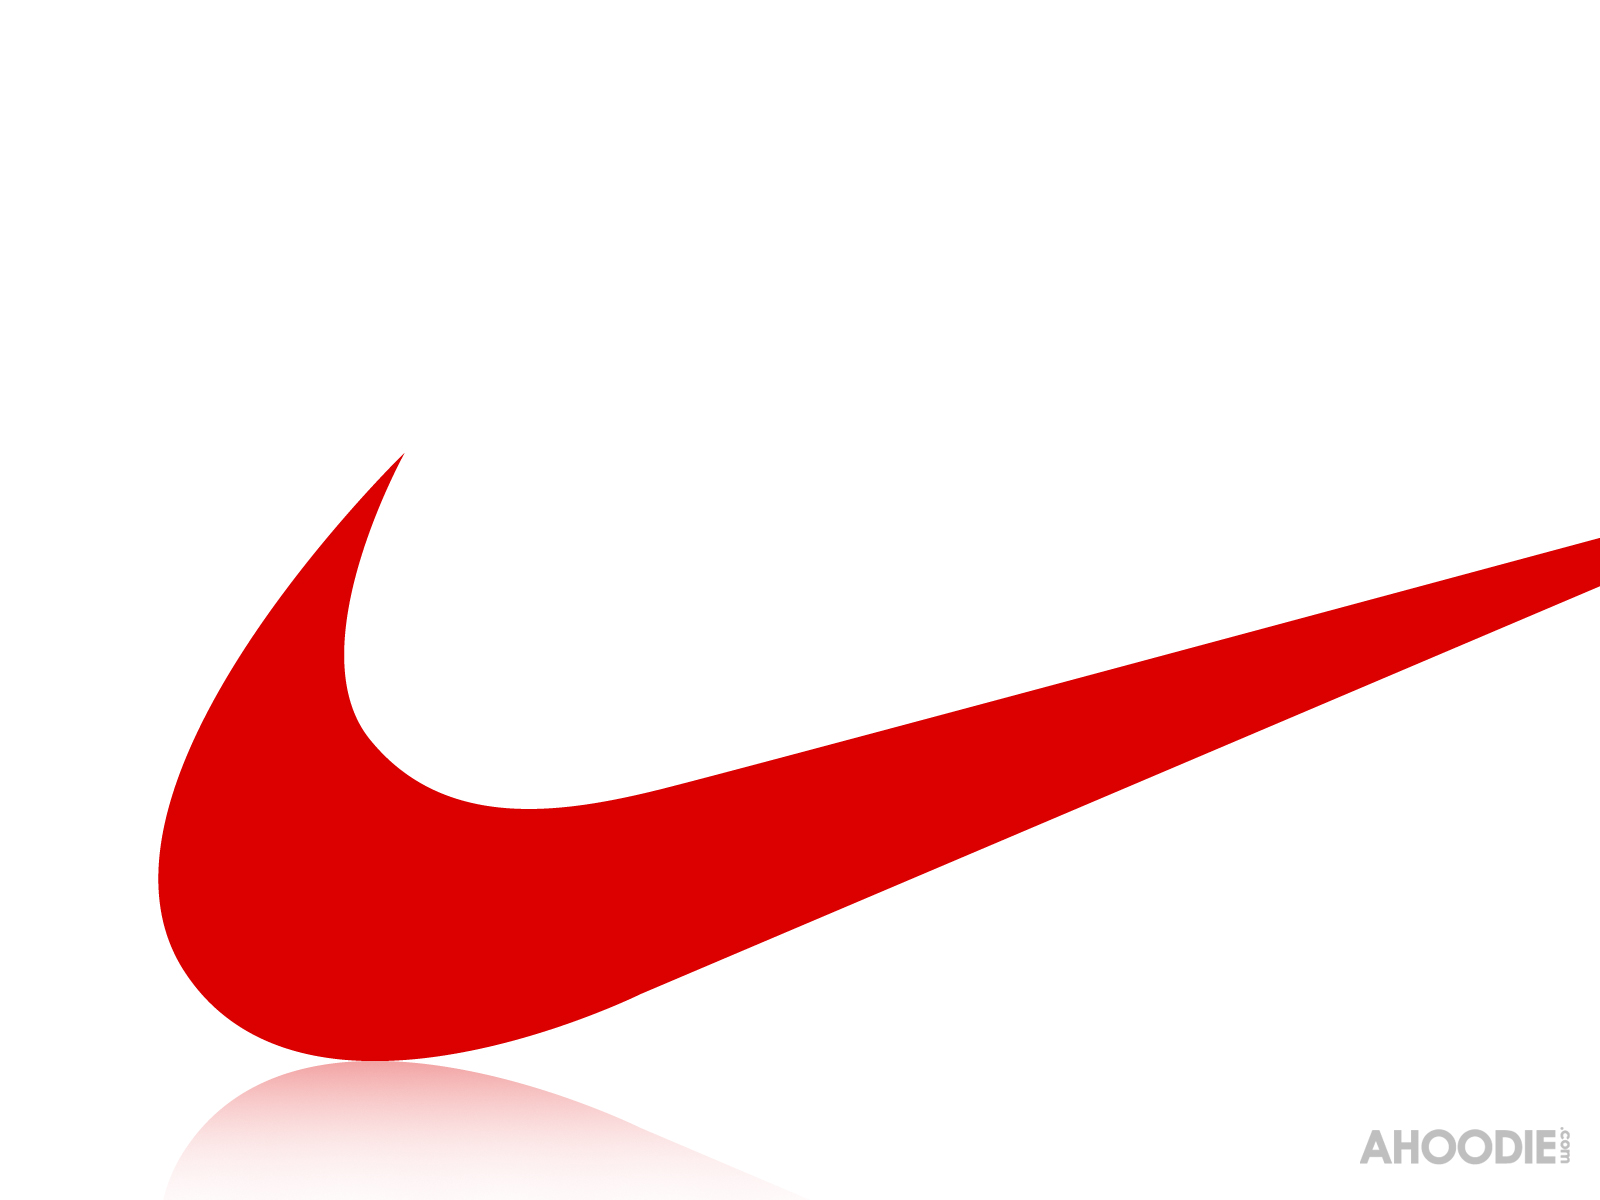 Nike Symbol Transparent